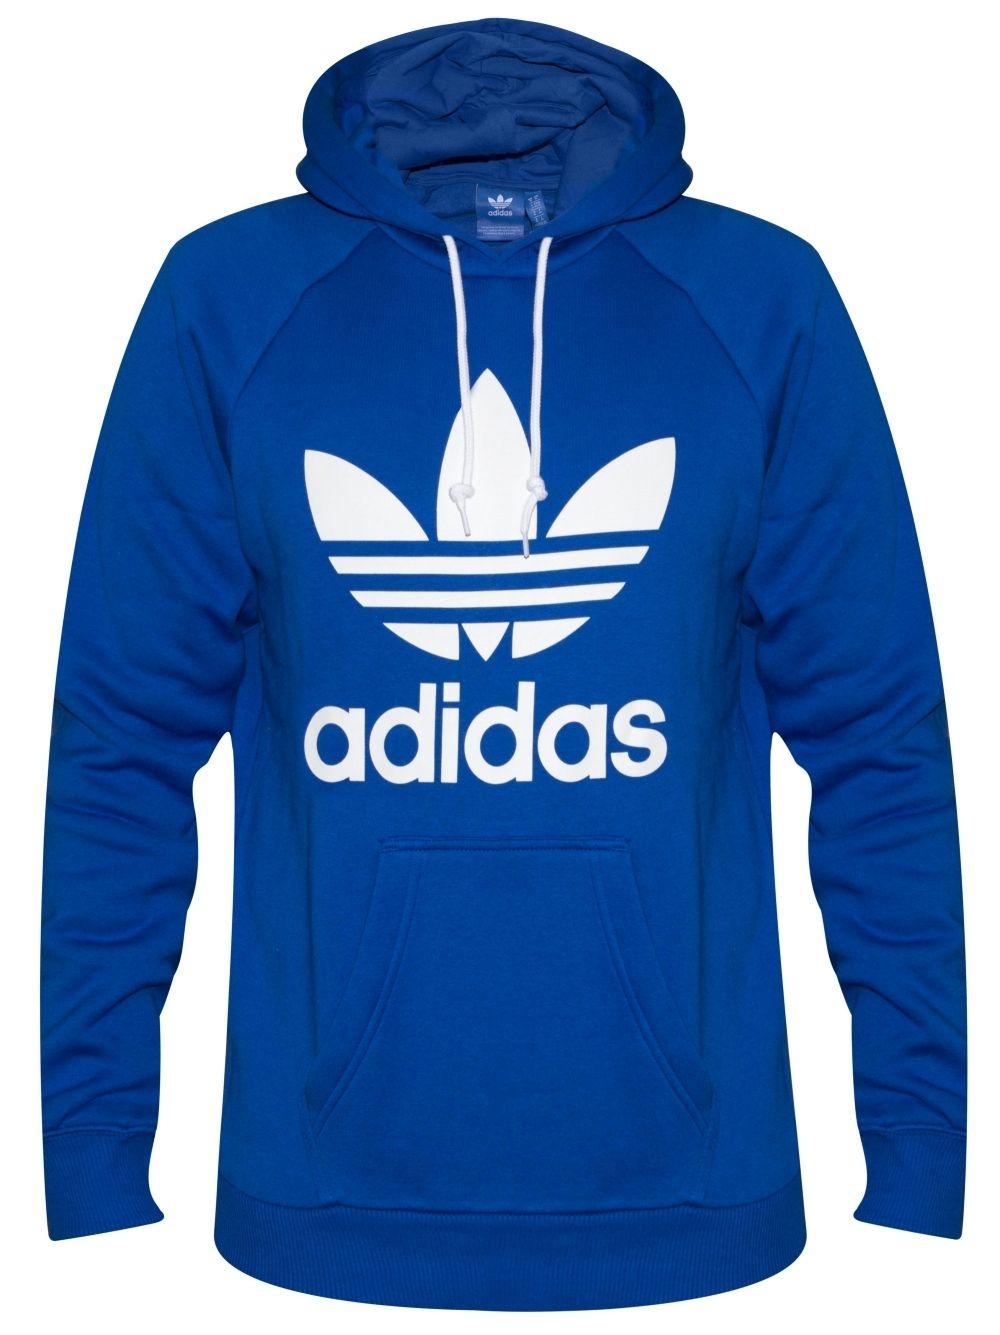 Blue and White Adidas Logo - Adidas Originals Royal Blue & White Hooded Sweatshirt